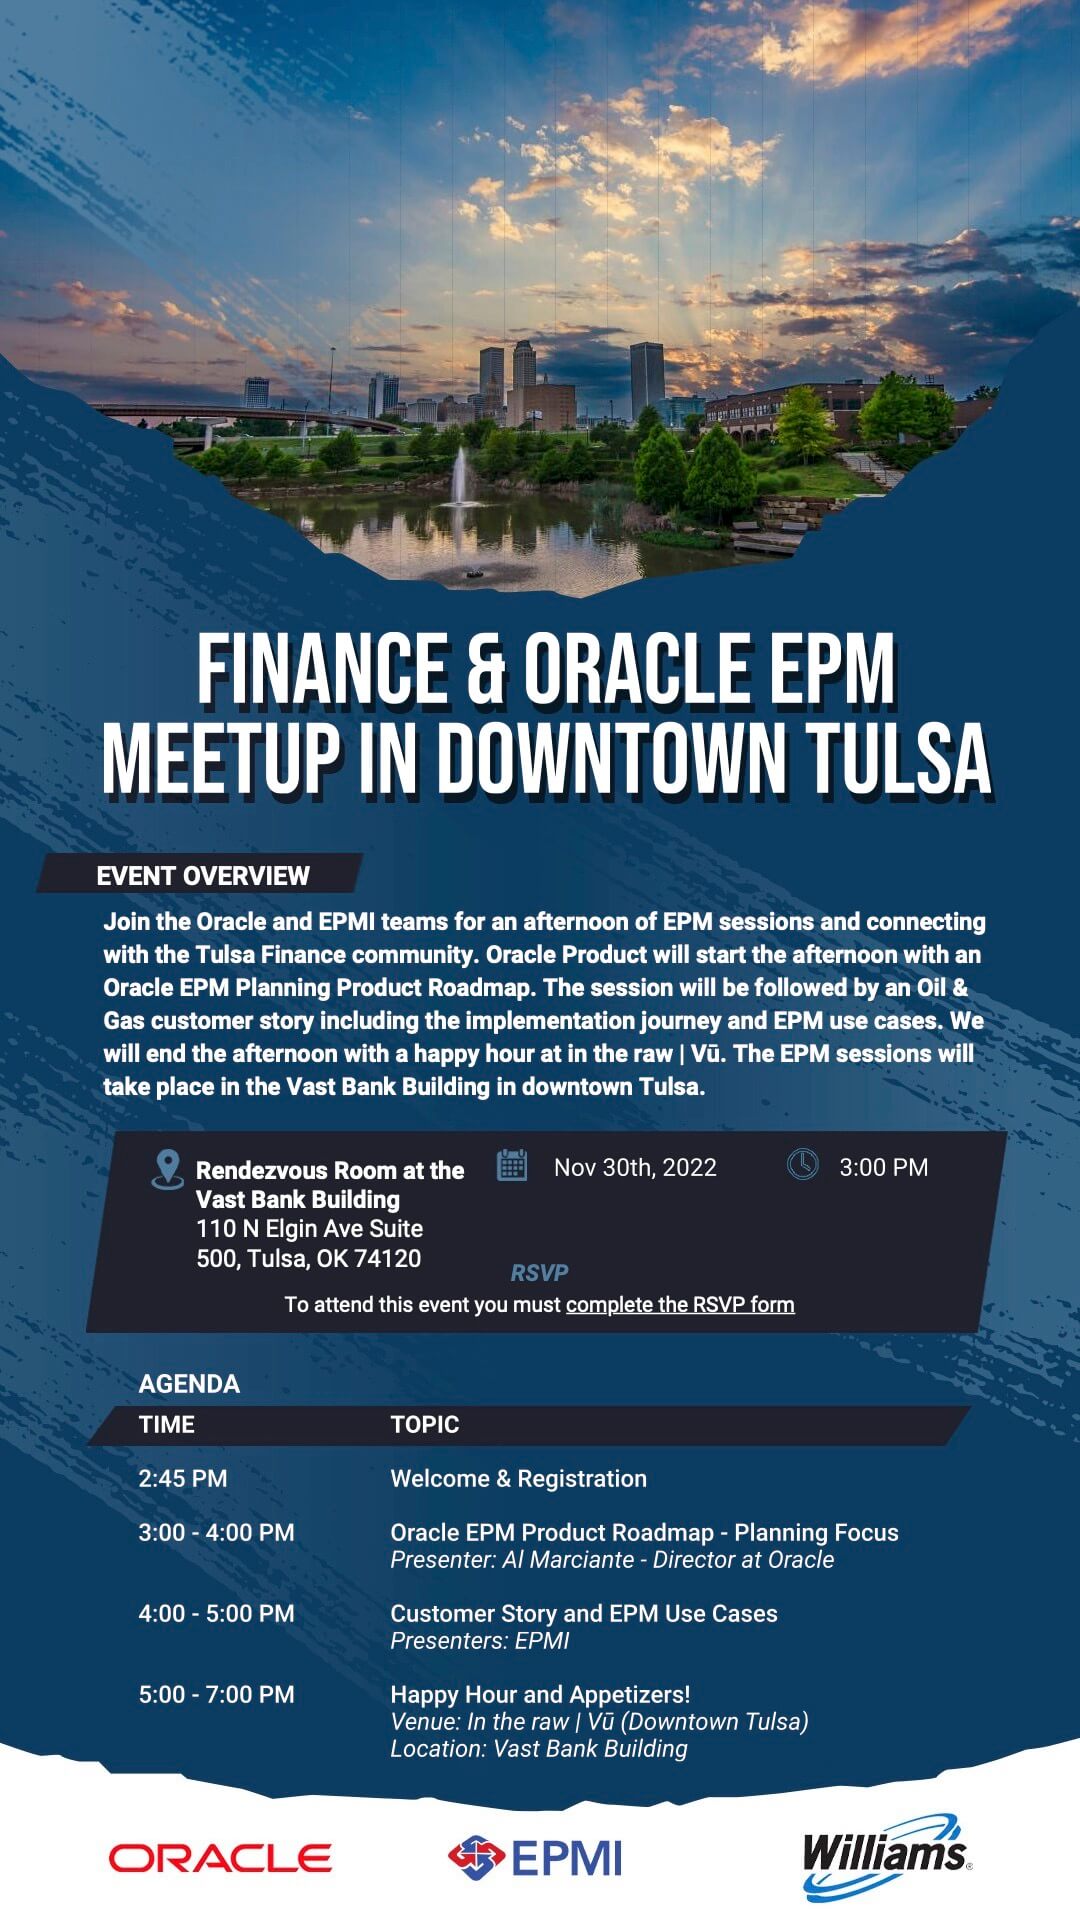 Finance & Oracle Tulsa Meetup Flyer